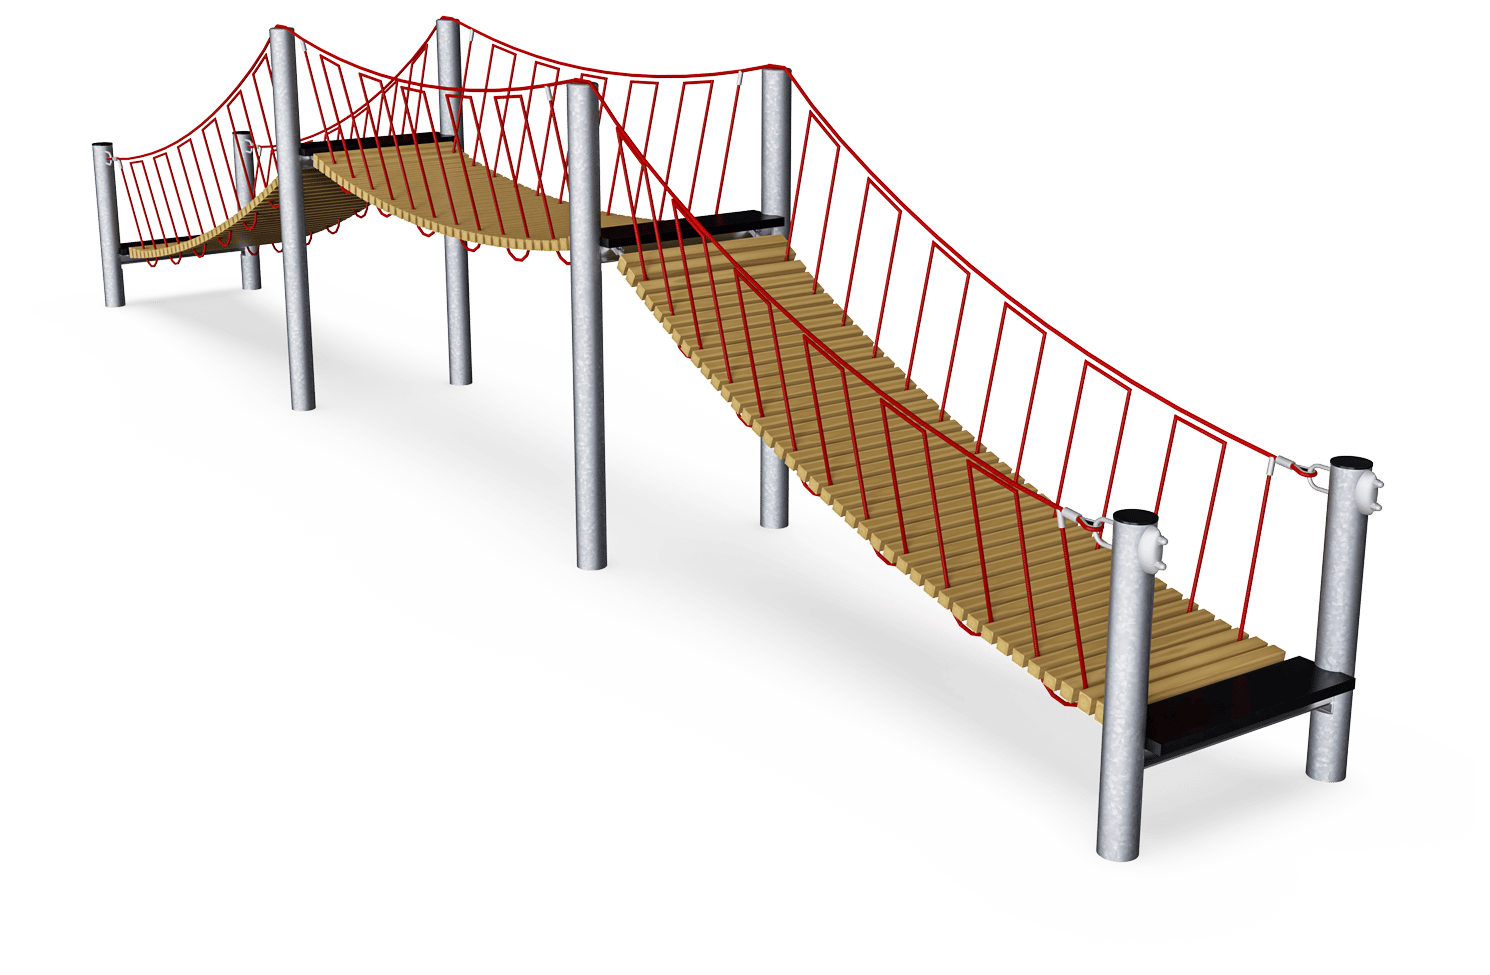 Bridge with Wooden Slats, 12m